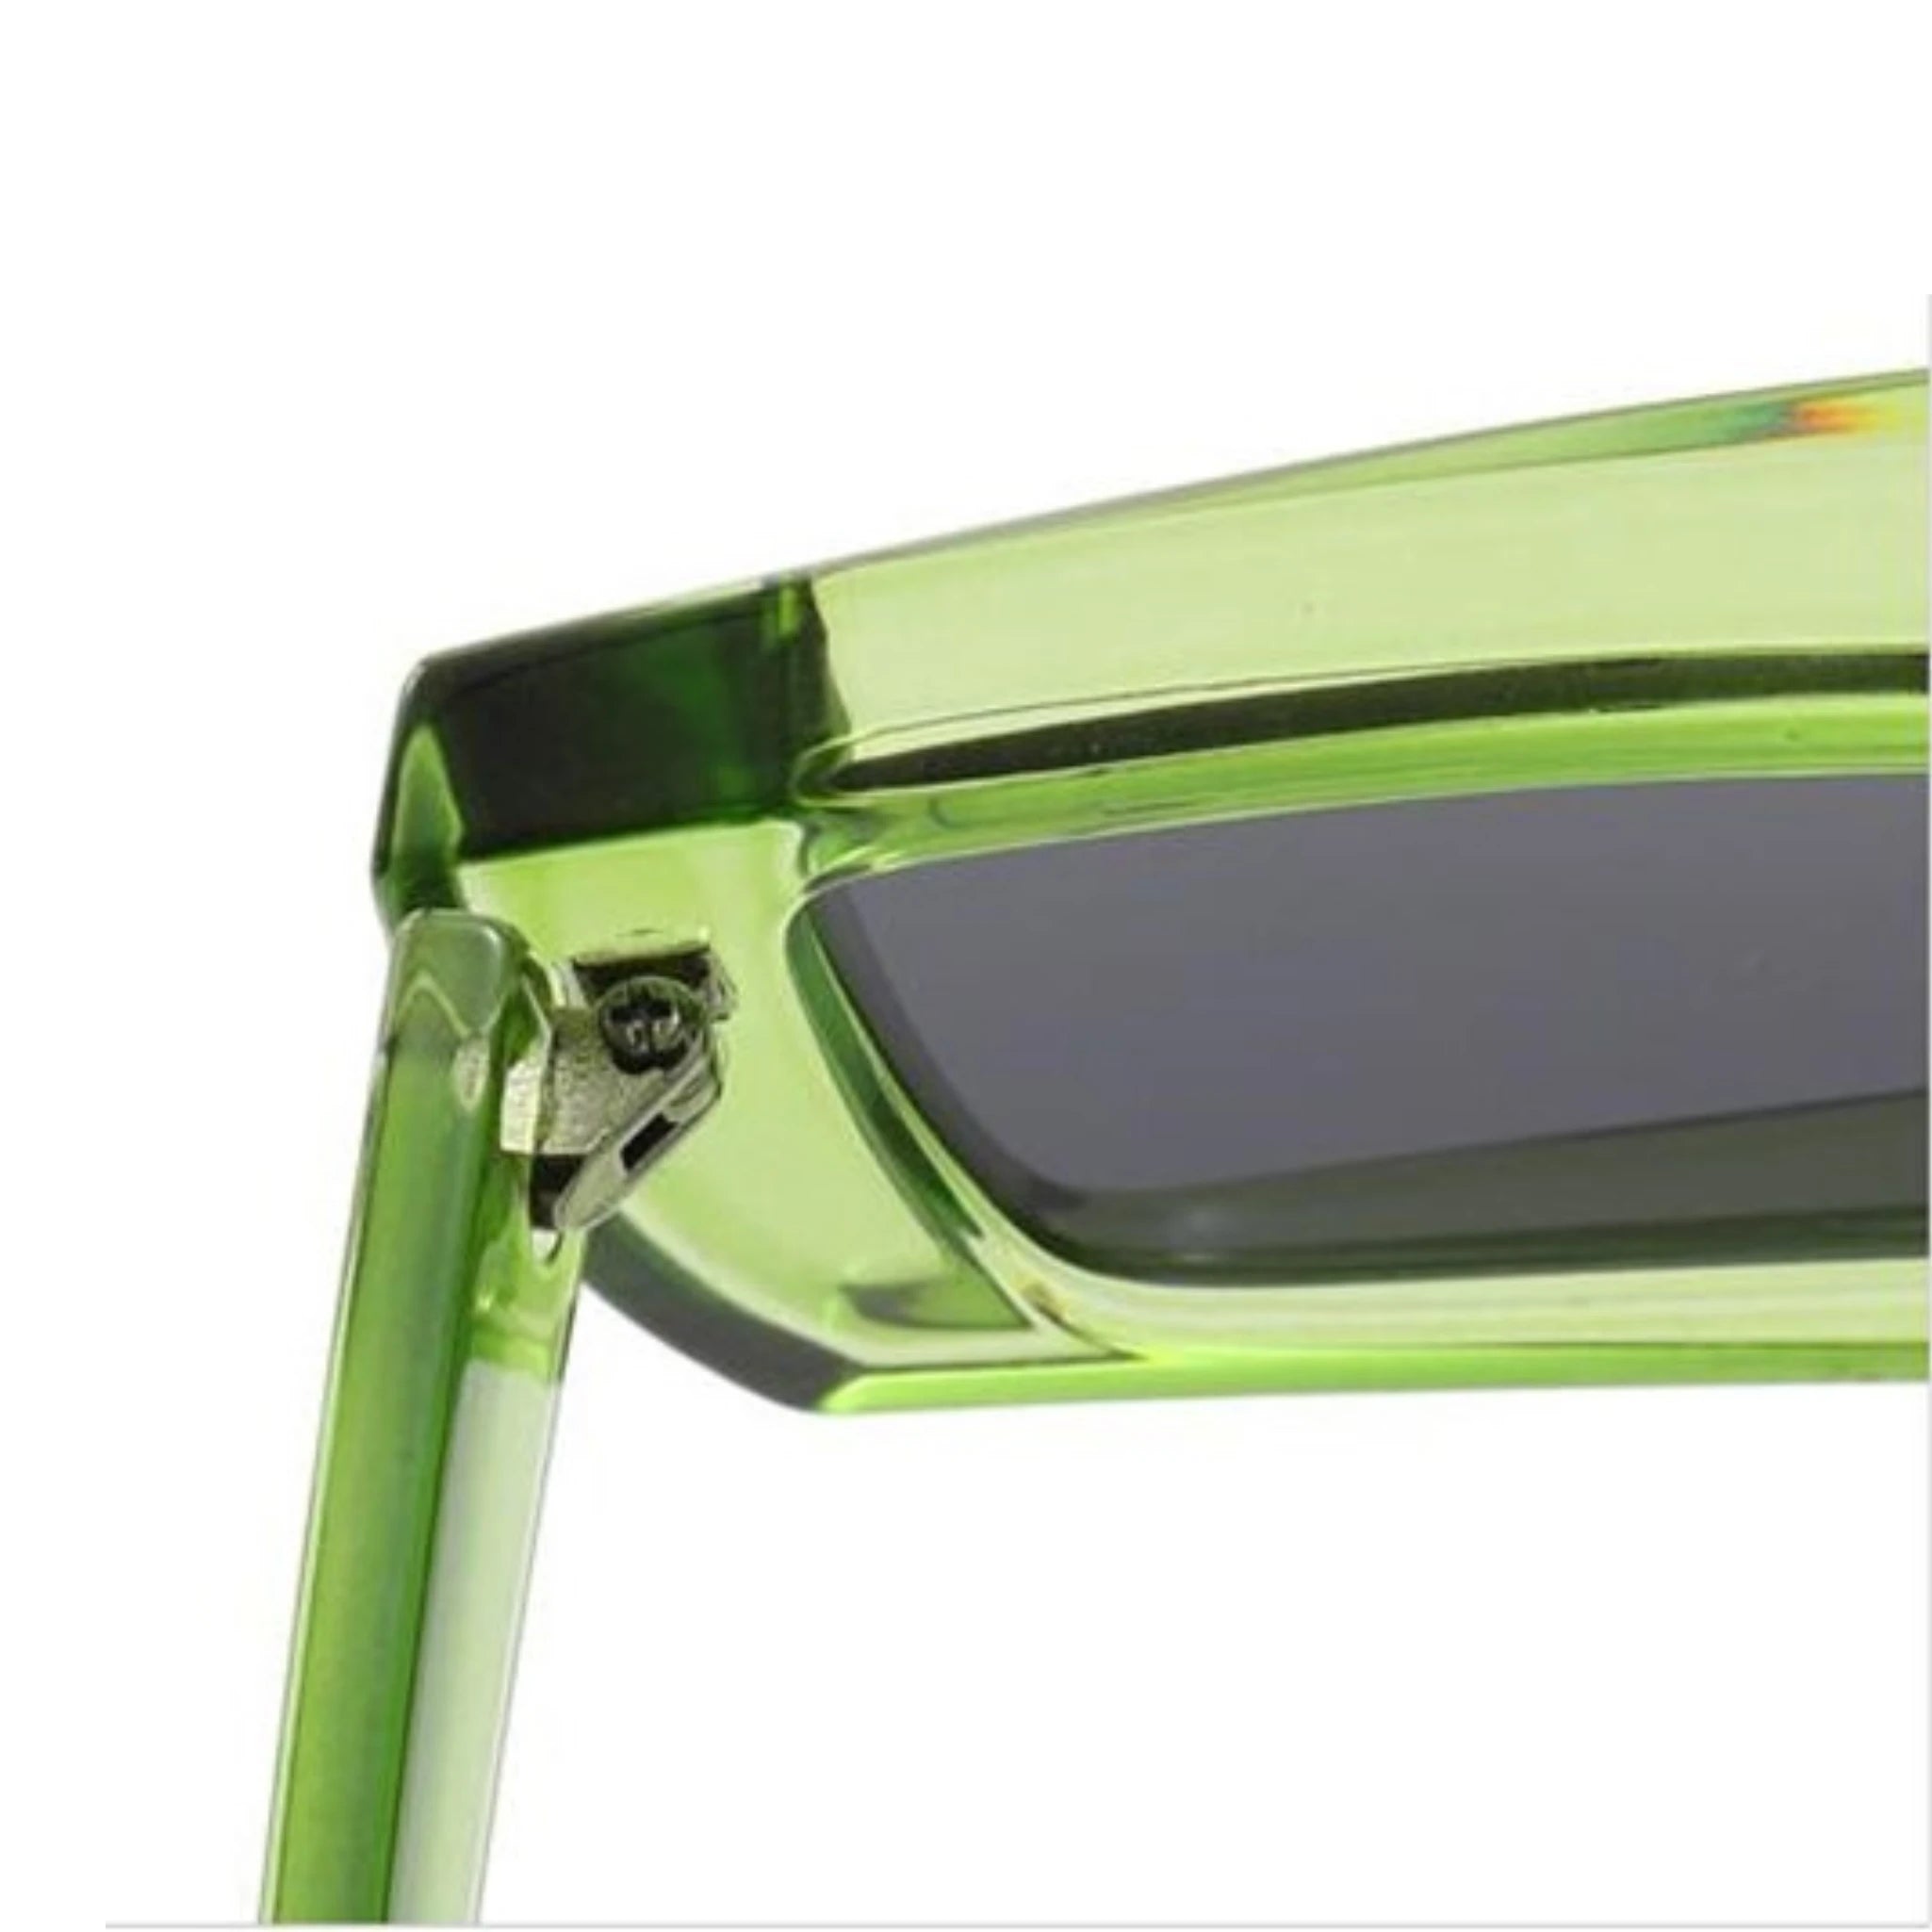 Futuristic Series Street Wear Y2K Rectangle Sunglasses - Neon Green